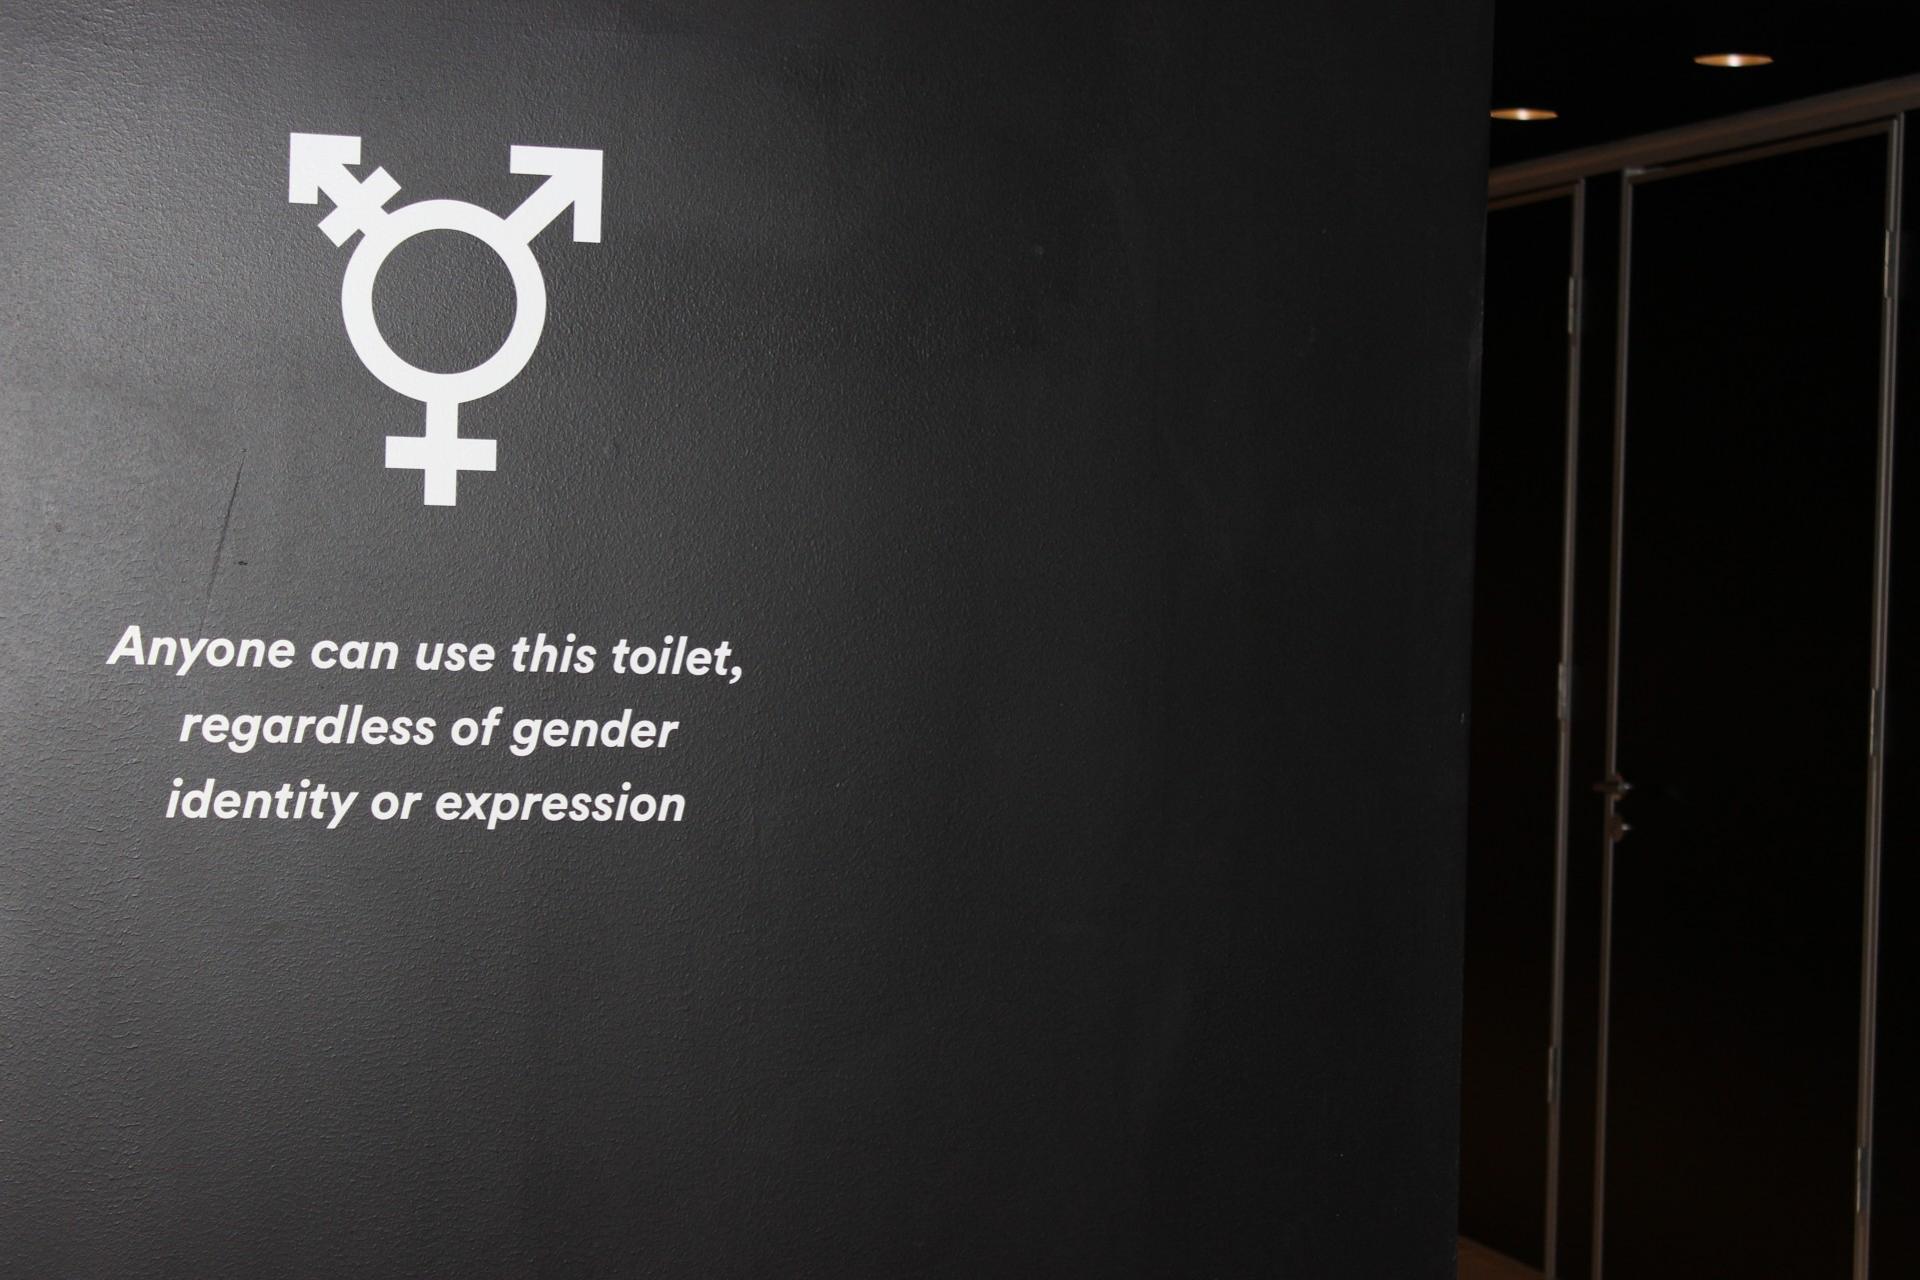 K.B. Hallen har de første LGBTQIA-toiletter. Altså toiletter, der ikke er målrettet særlige køn. Foto: Louise Gregersen.